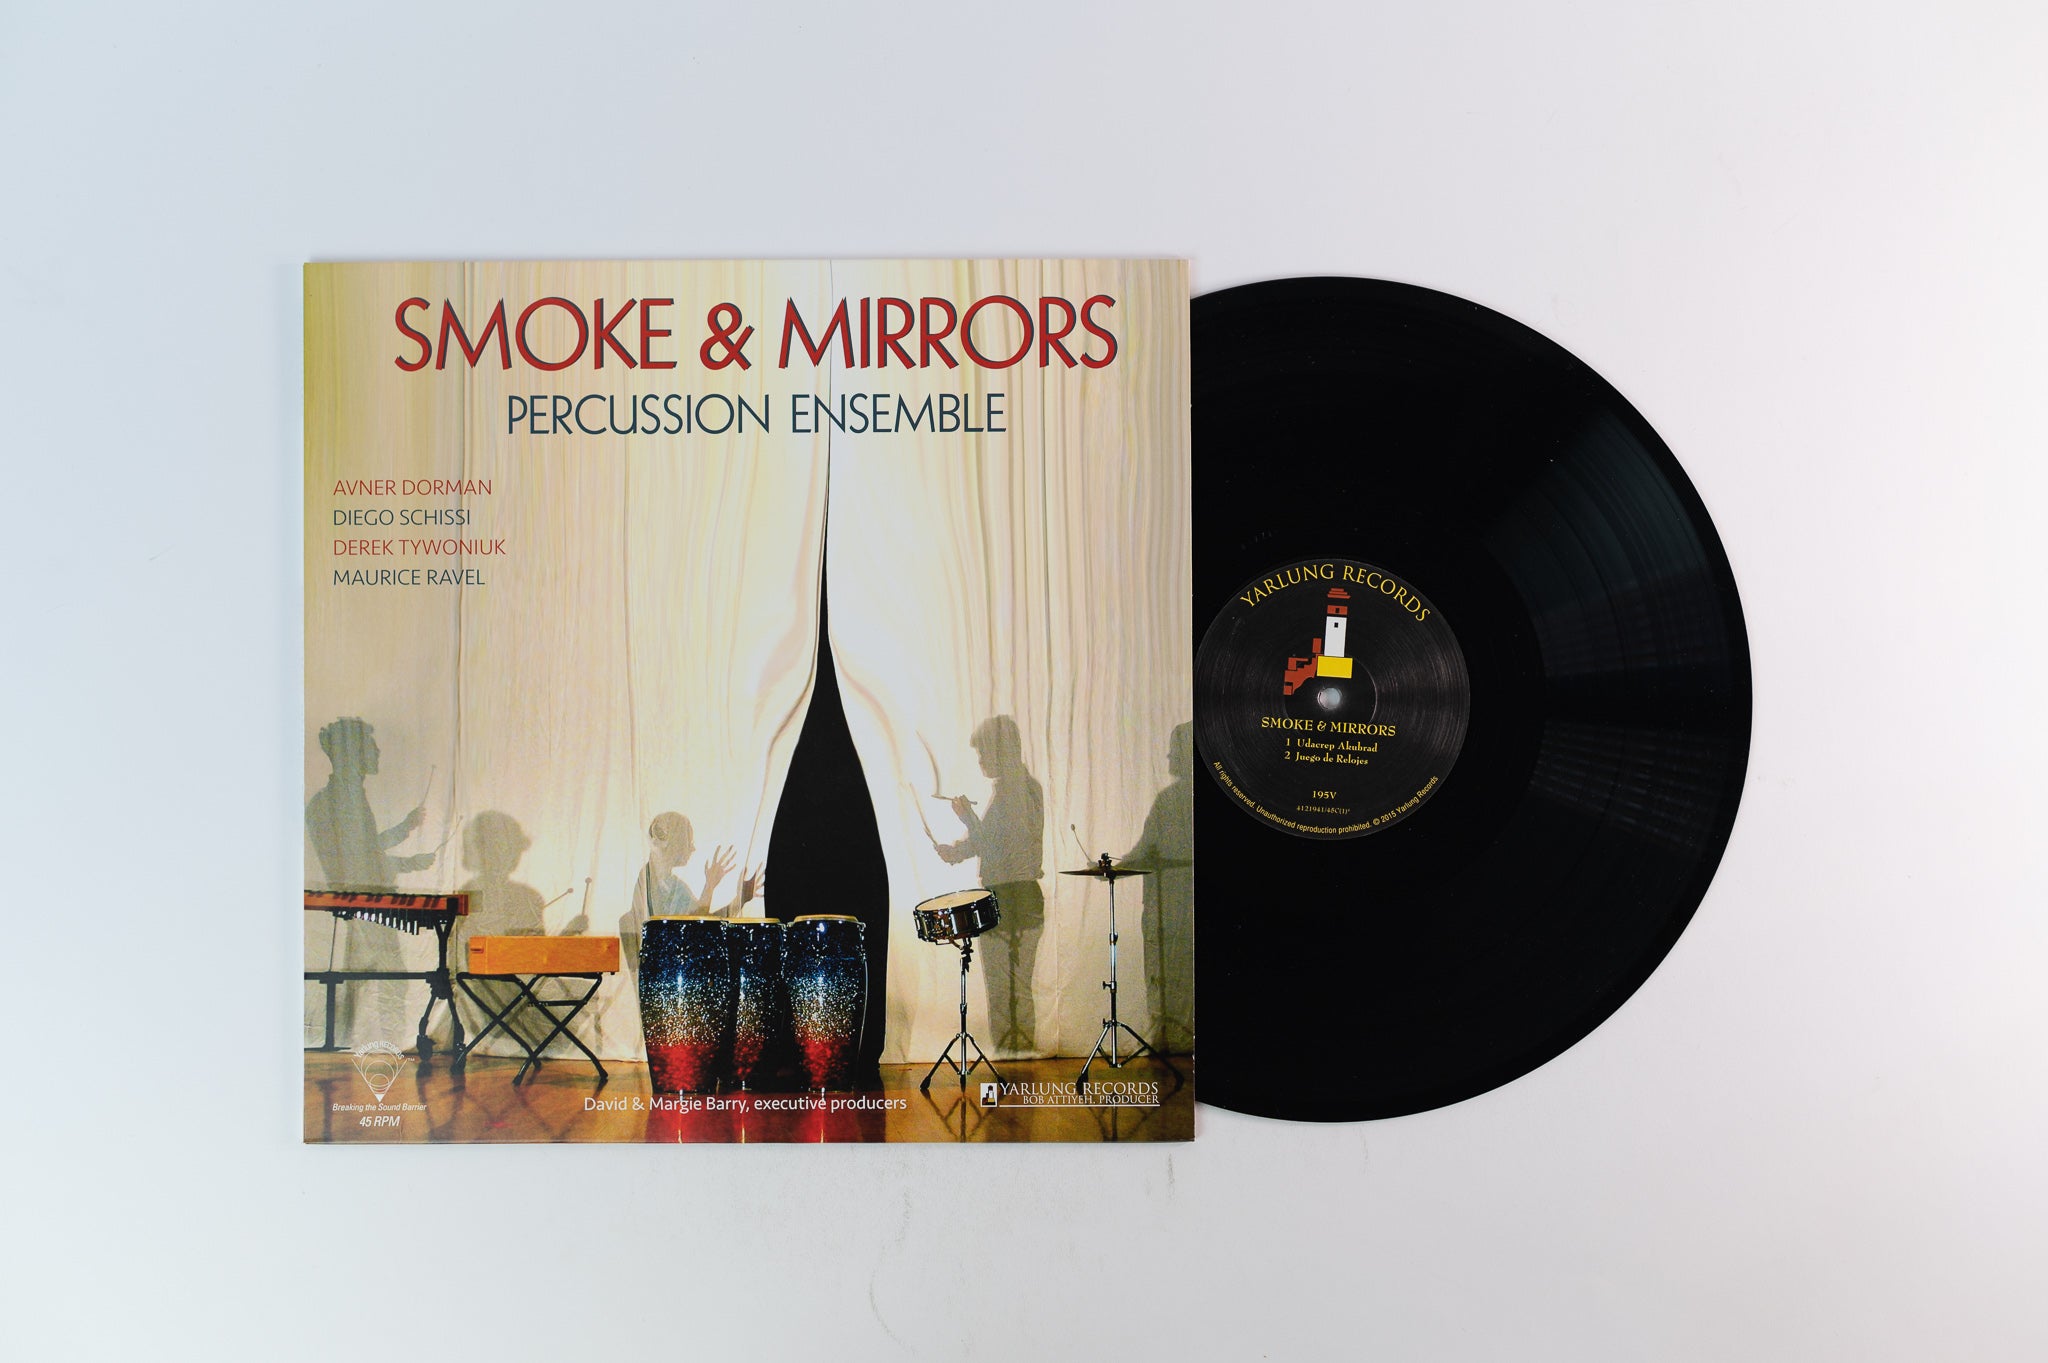 Smoke & Mirrors Percussion Ensemble - Smoke & Mirrors on Yarlung 180 Gram